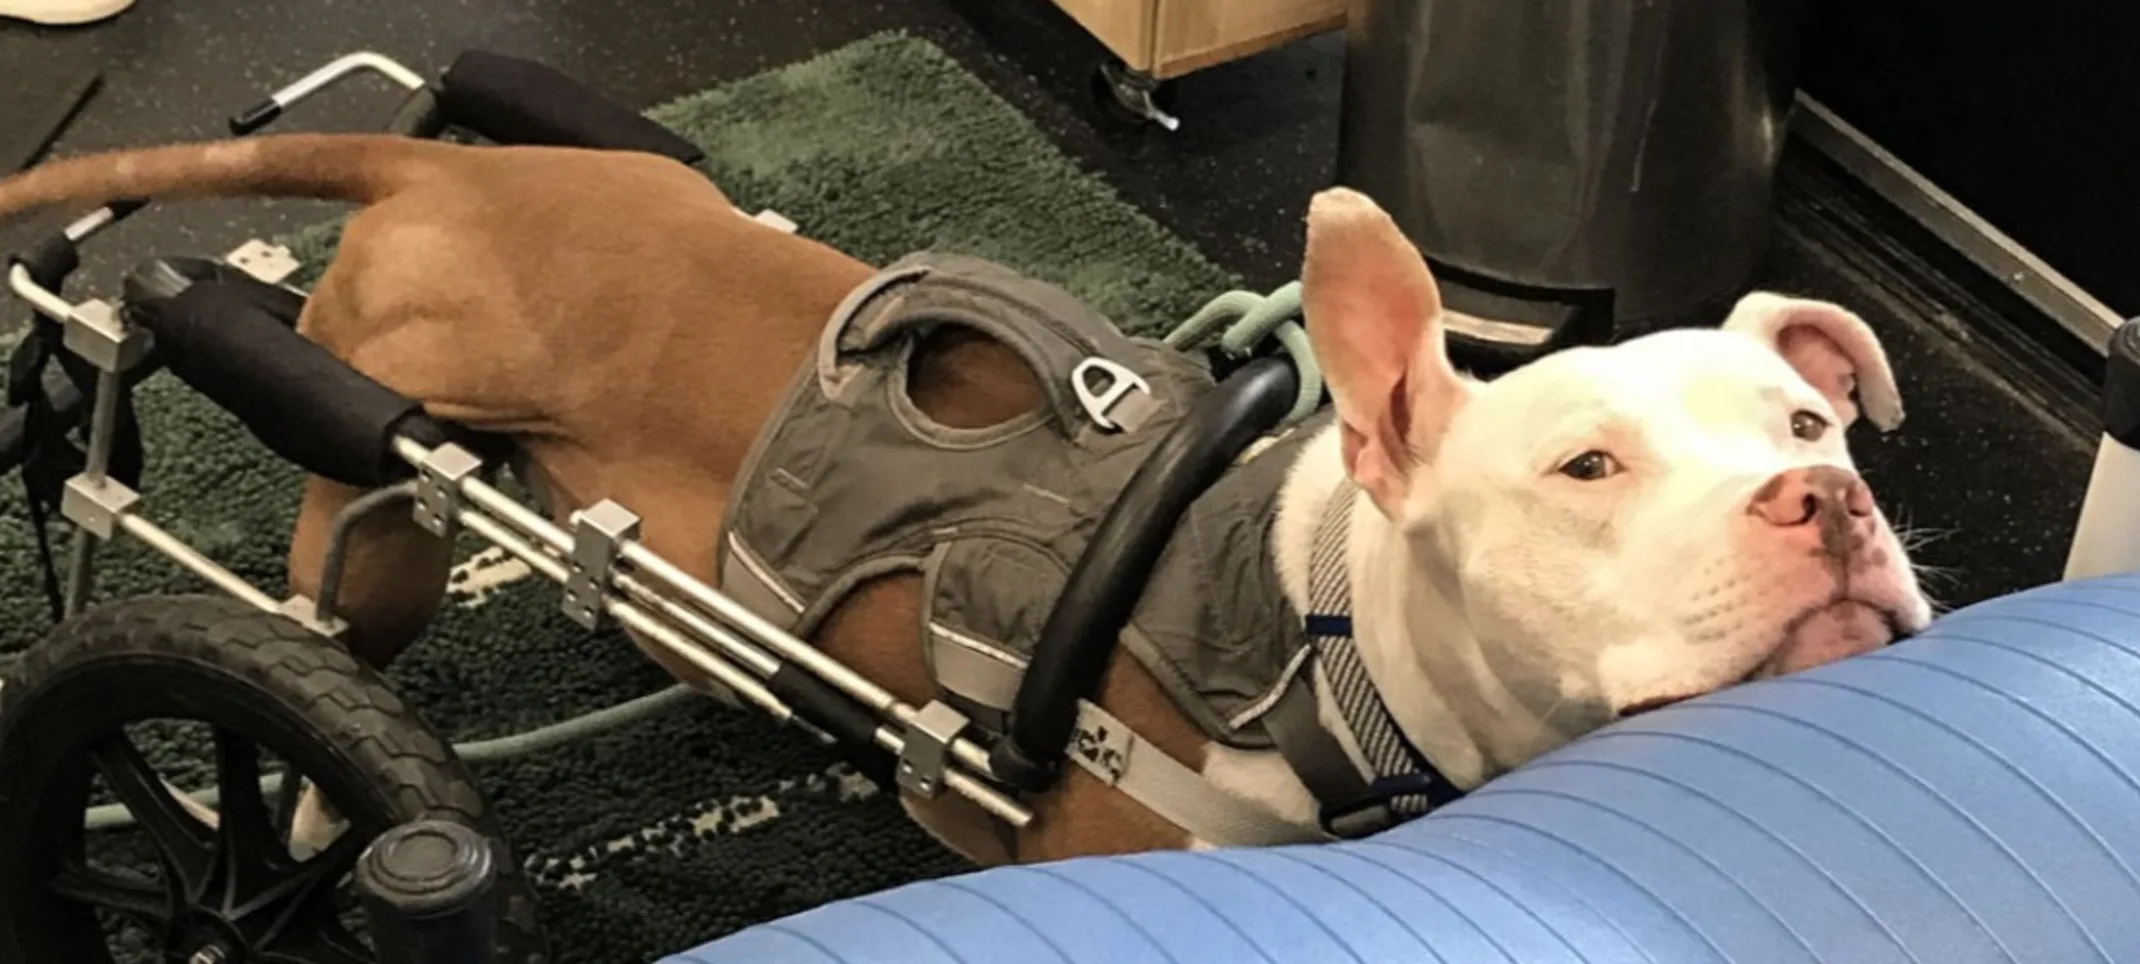 A brown dog wearing physical rehabilitation equipment